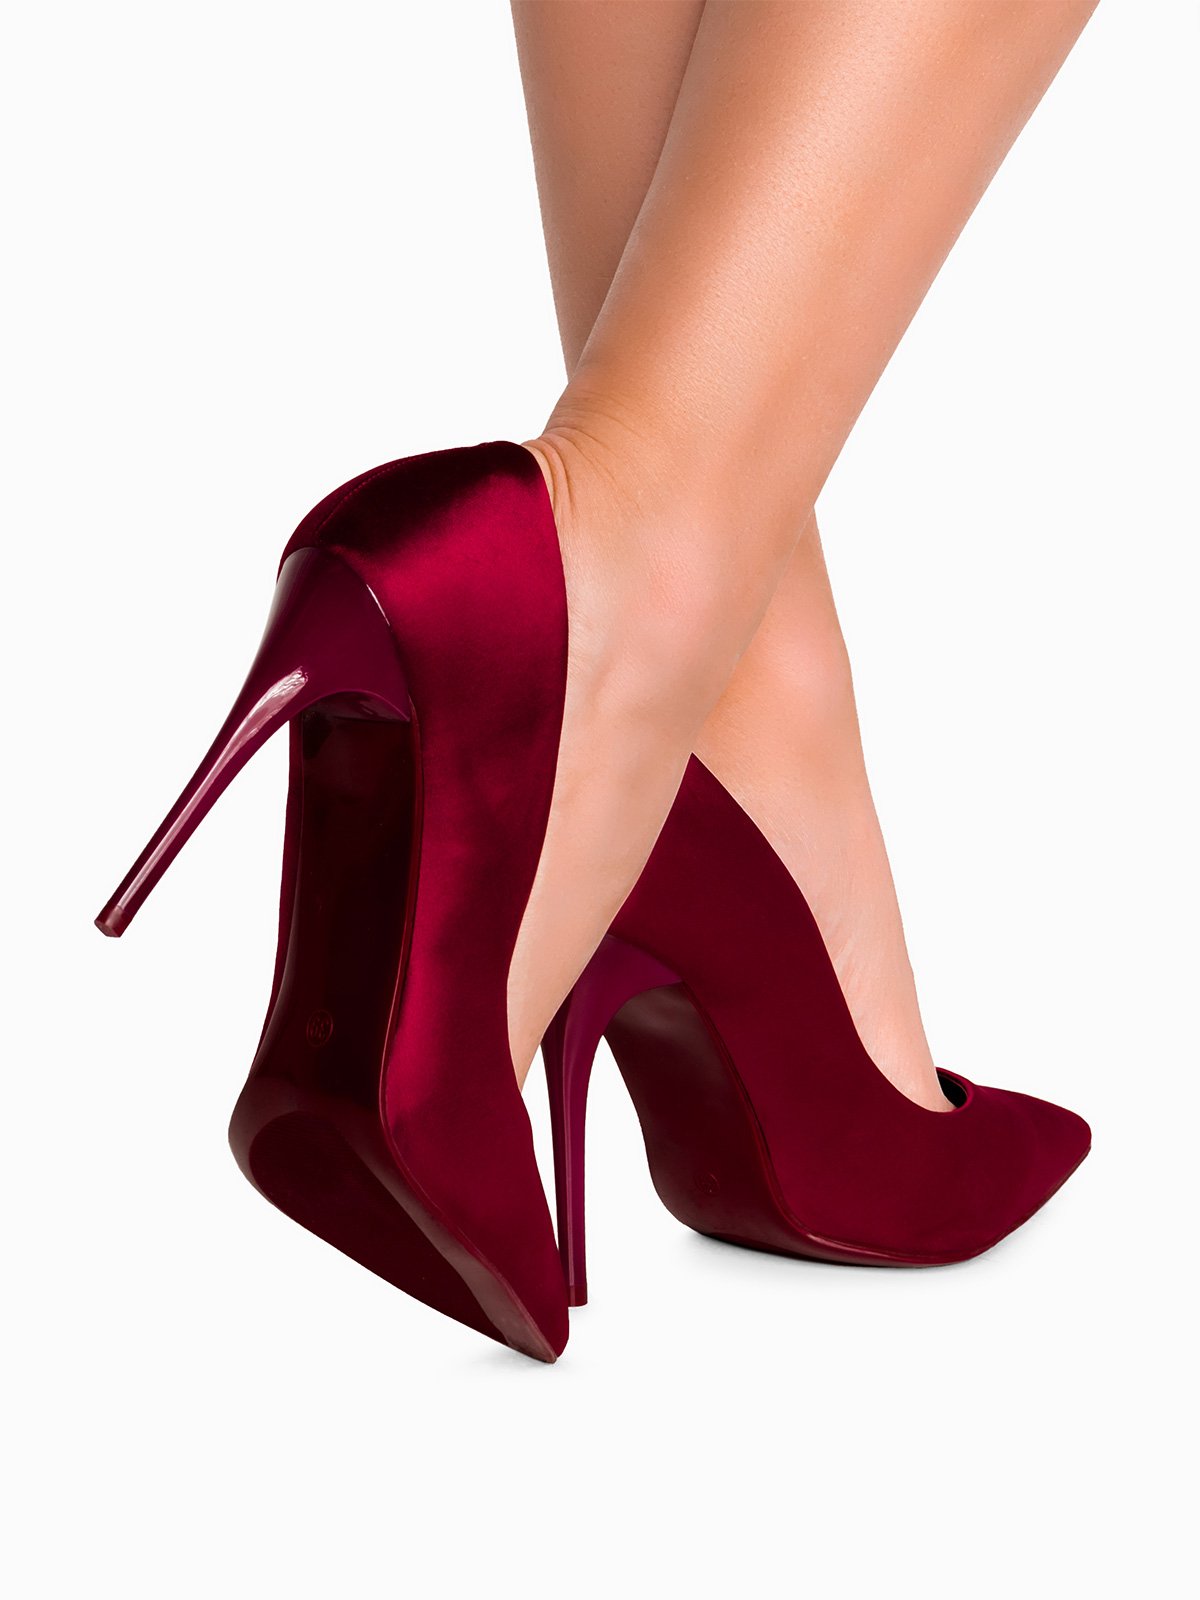 Women's heels- dark red LR429 | MODONE wholesale - Clothing For Men